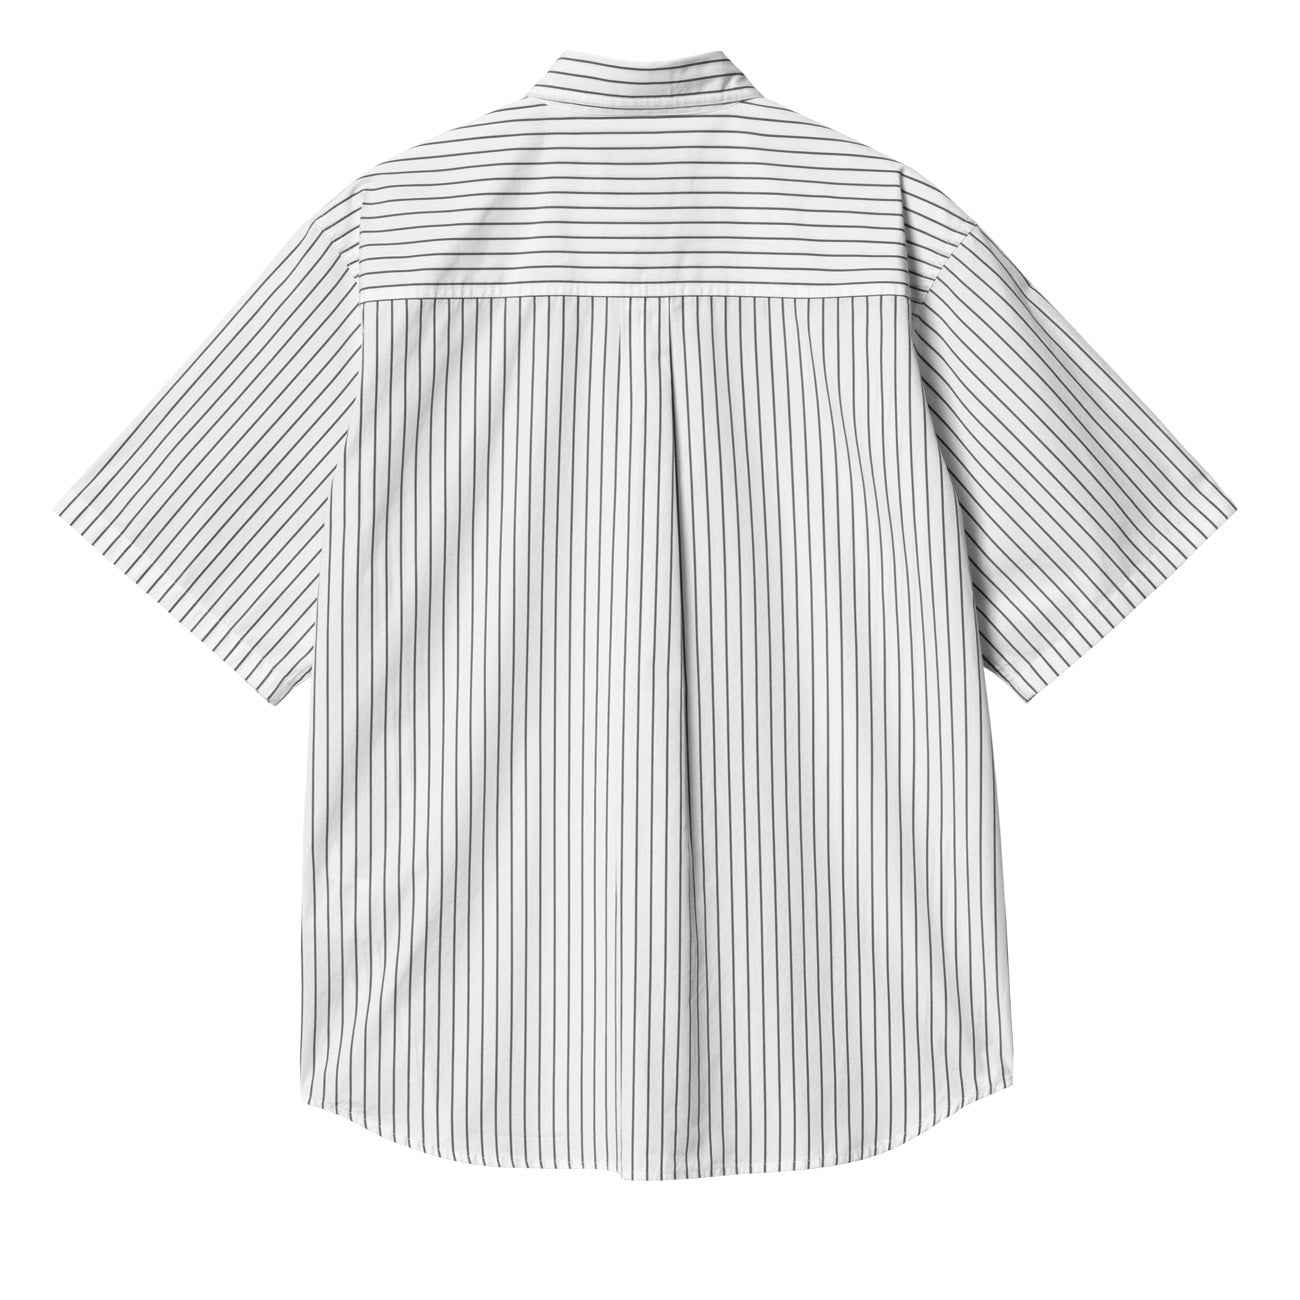 Carhartt WIP S/S Linus Shirt Linus Stripe Black White